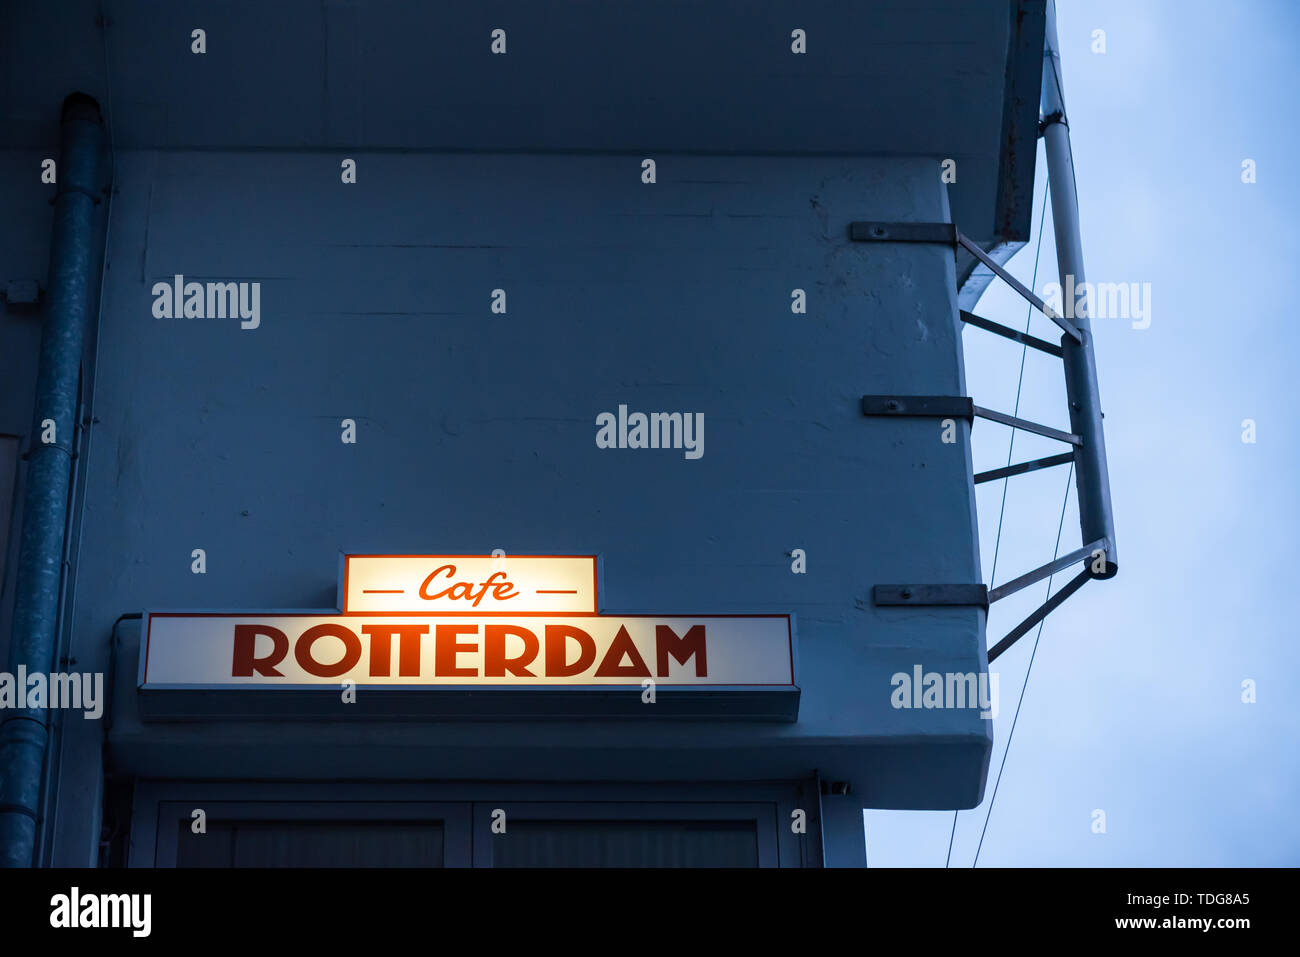 Rotterdam, Netherlands - May 5, 2019 : Cafe Rotterdam illuminated sign at dusk in the Cruise terminal area Stock Photo